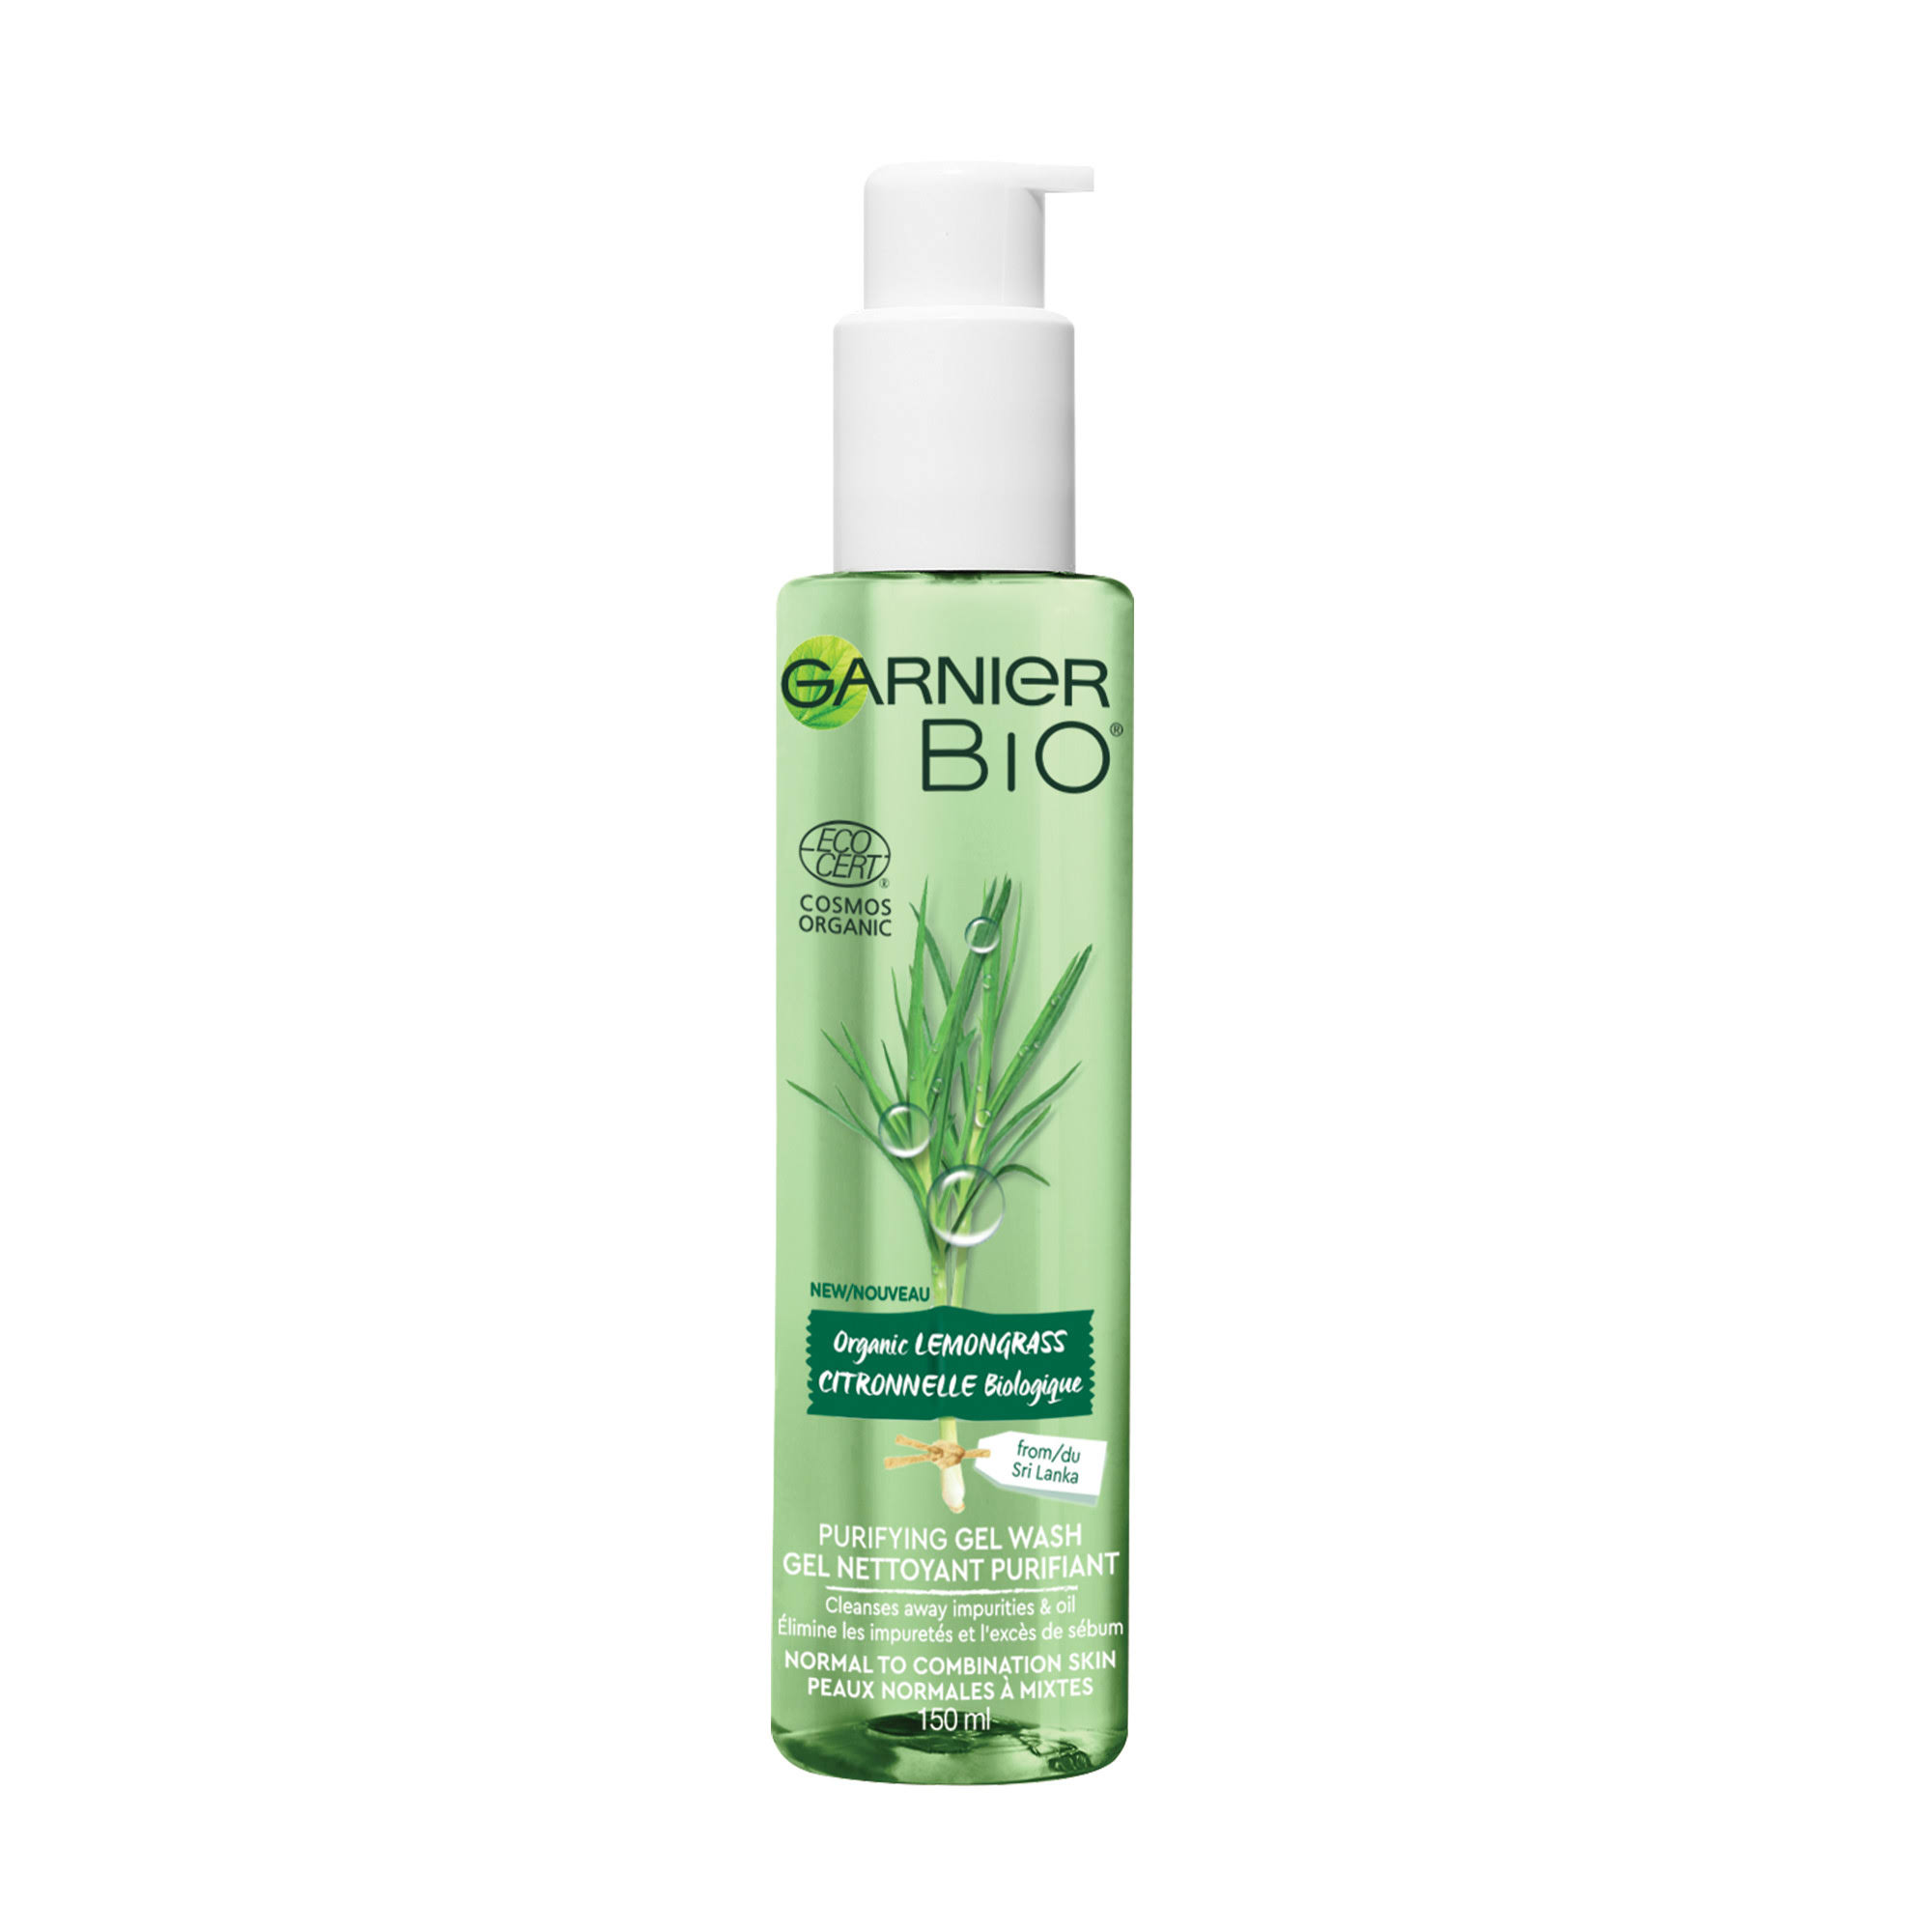 Garnier BIO Organic Lemongrass Gel Wash For Normal To Combination Skin, 150 mL